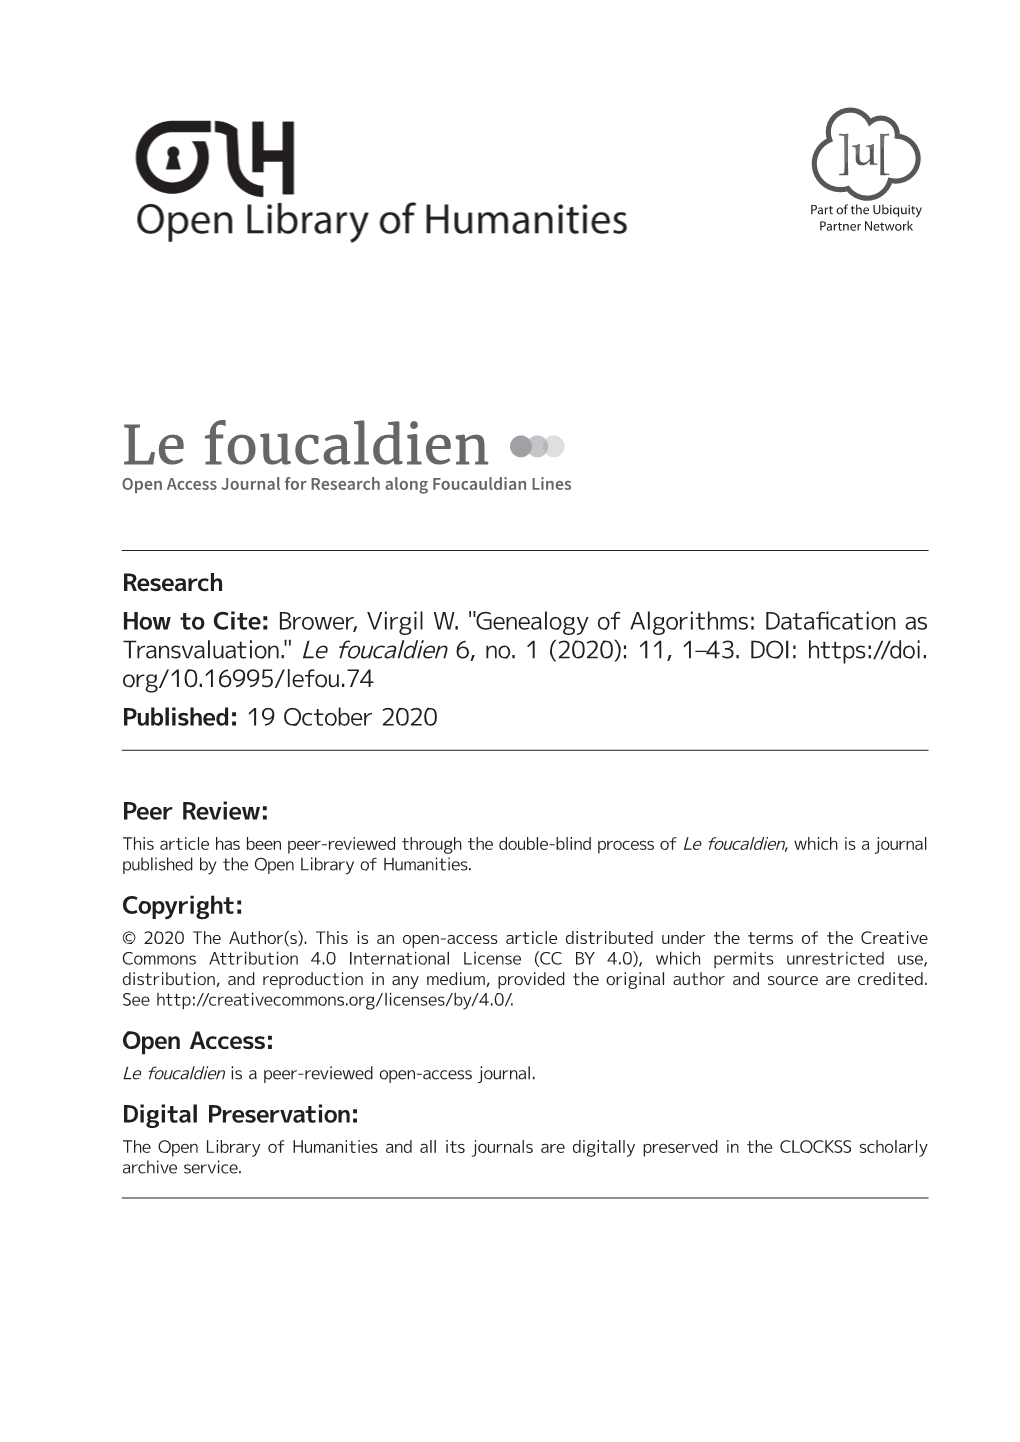 Genealogy of Algorithms: Datafication As Transvaluation." Le Foucaldien 6, No